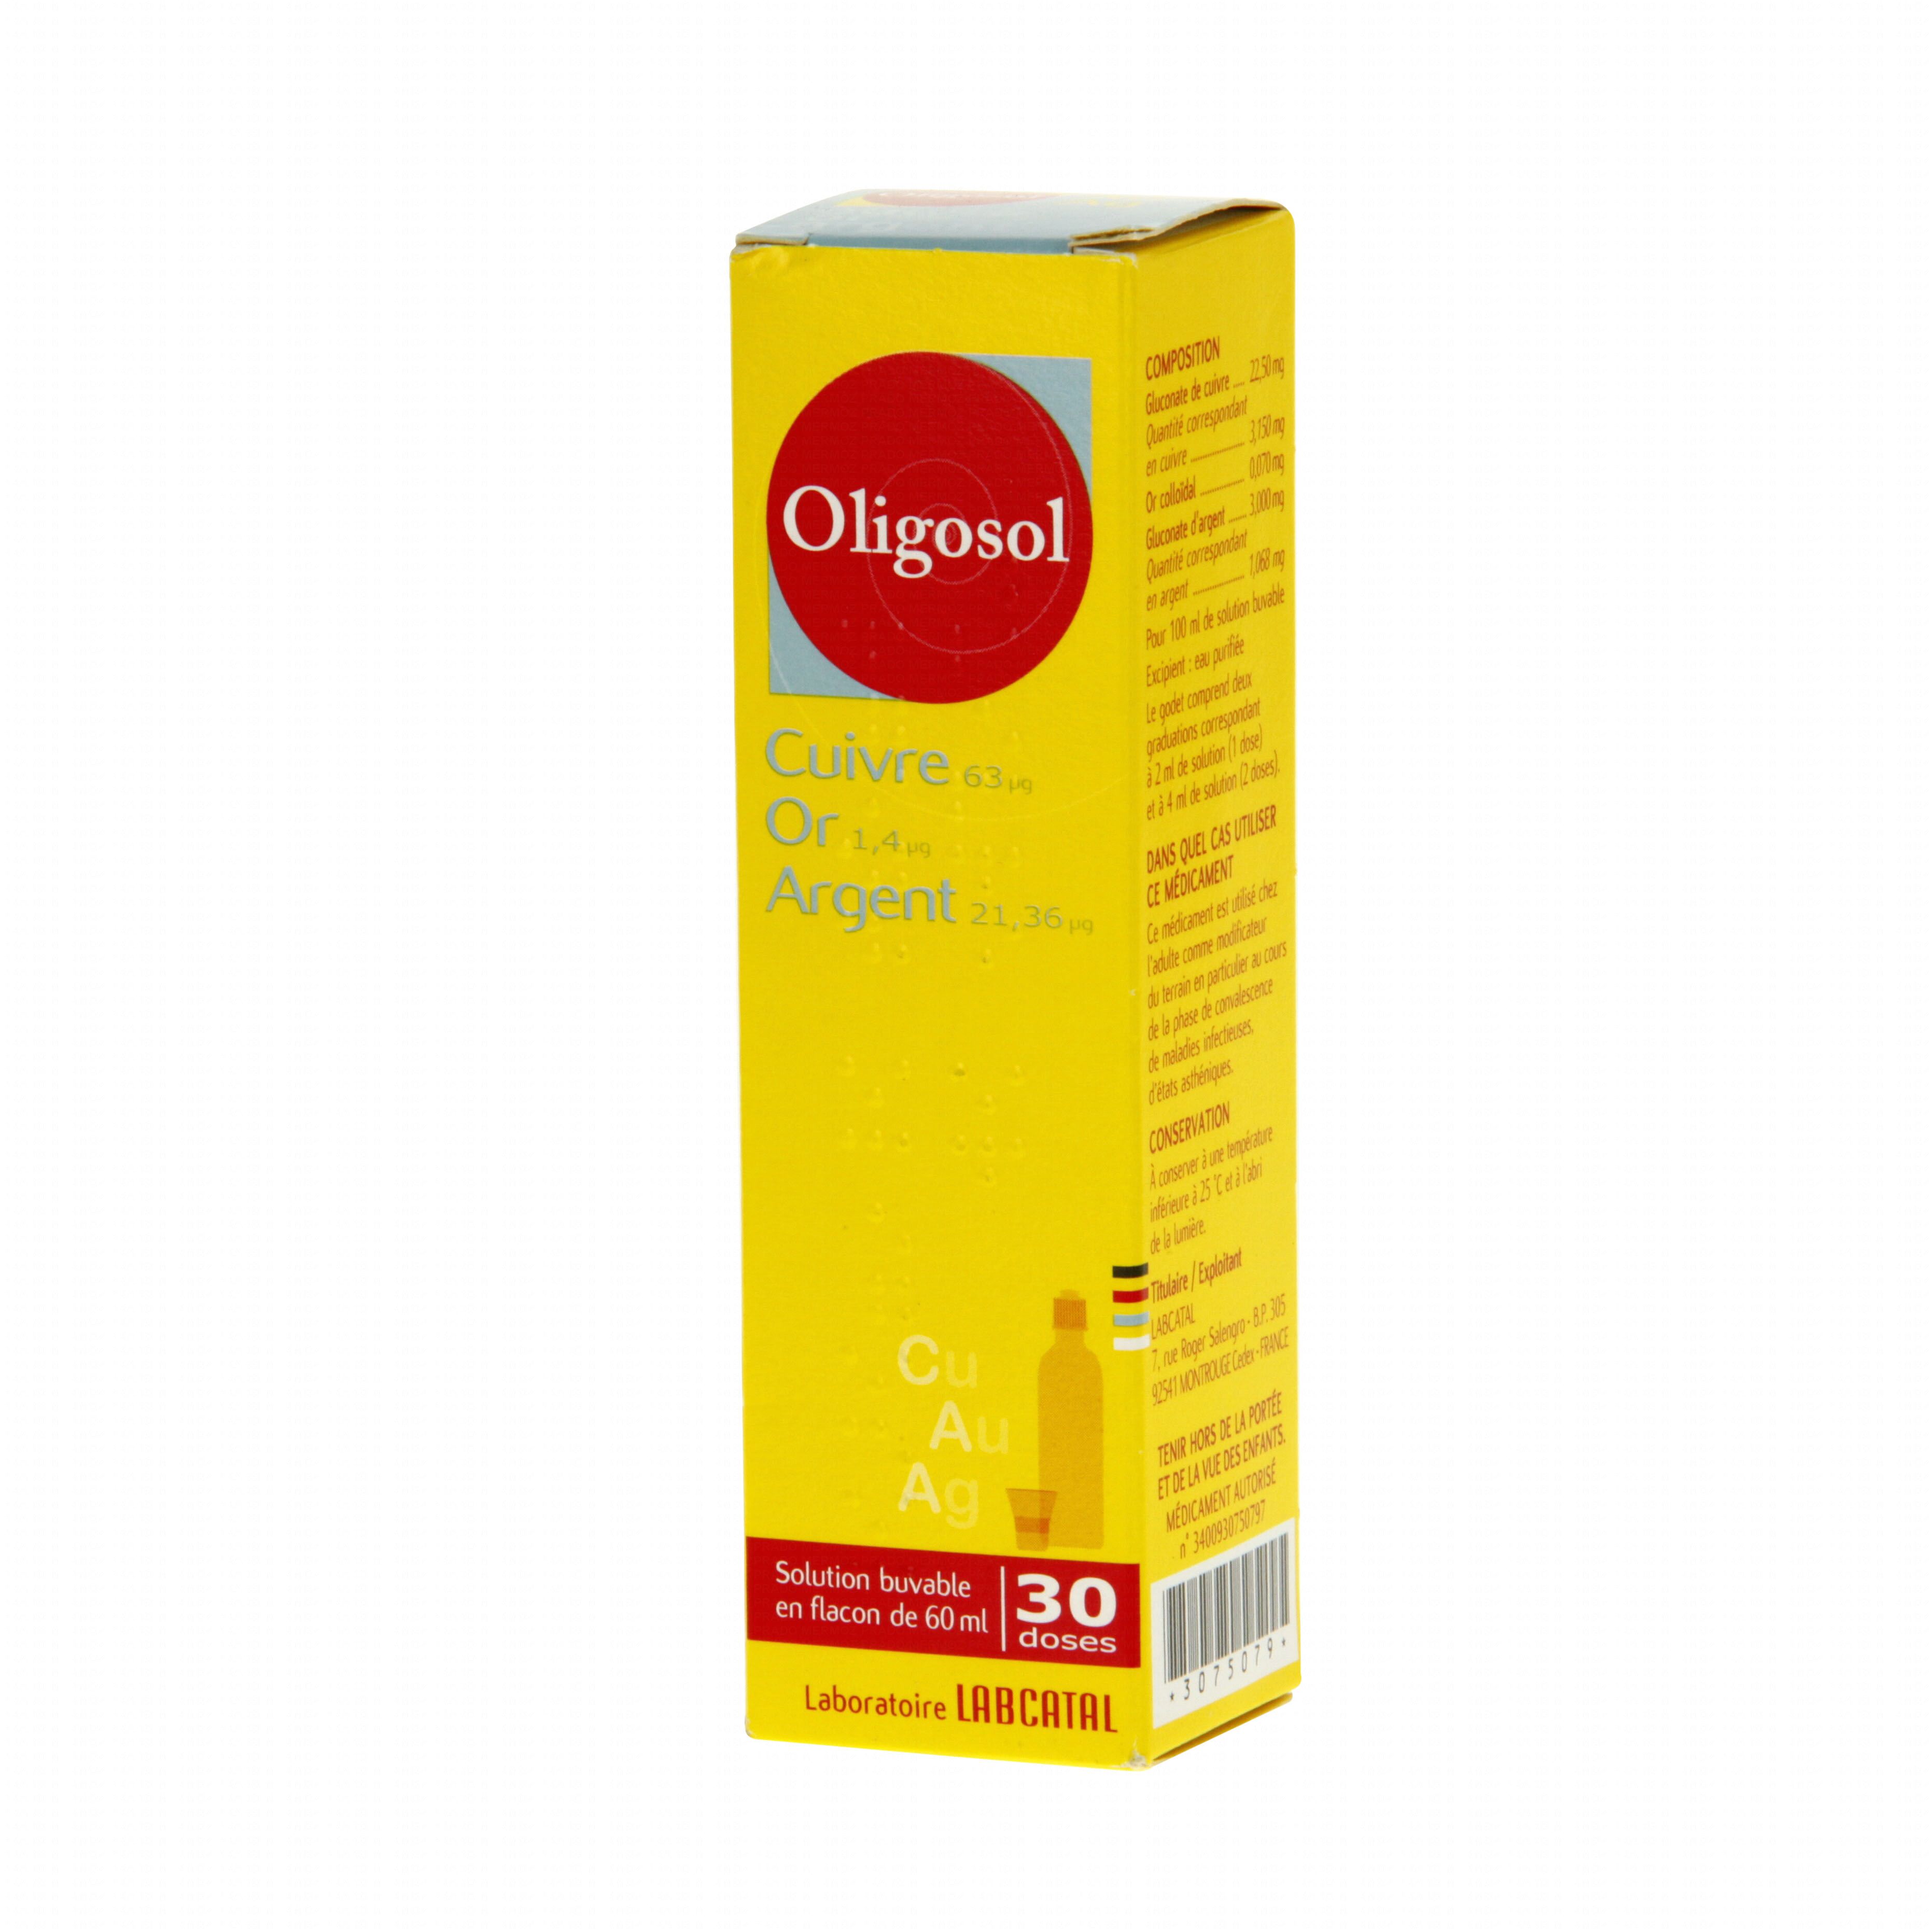 OLIGOLSOL Cuivre-or-argent flacon de 60 ml - Médicament conseil - Pharmacie  Prado Mermoz